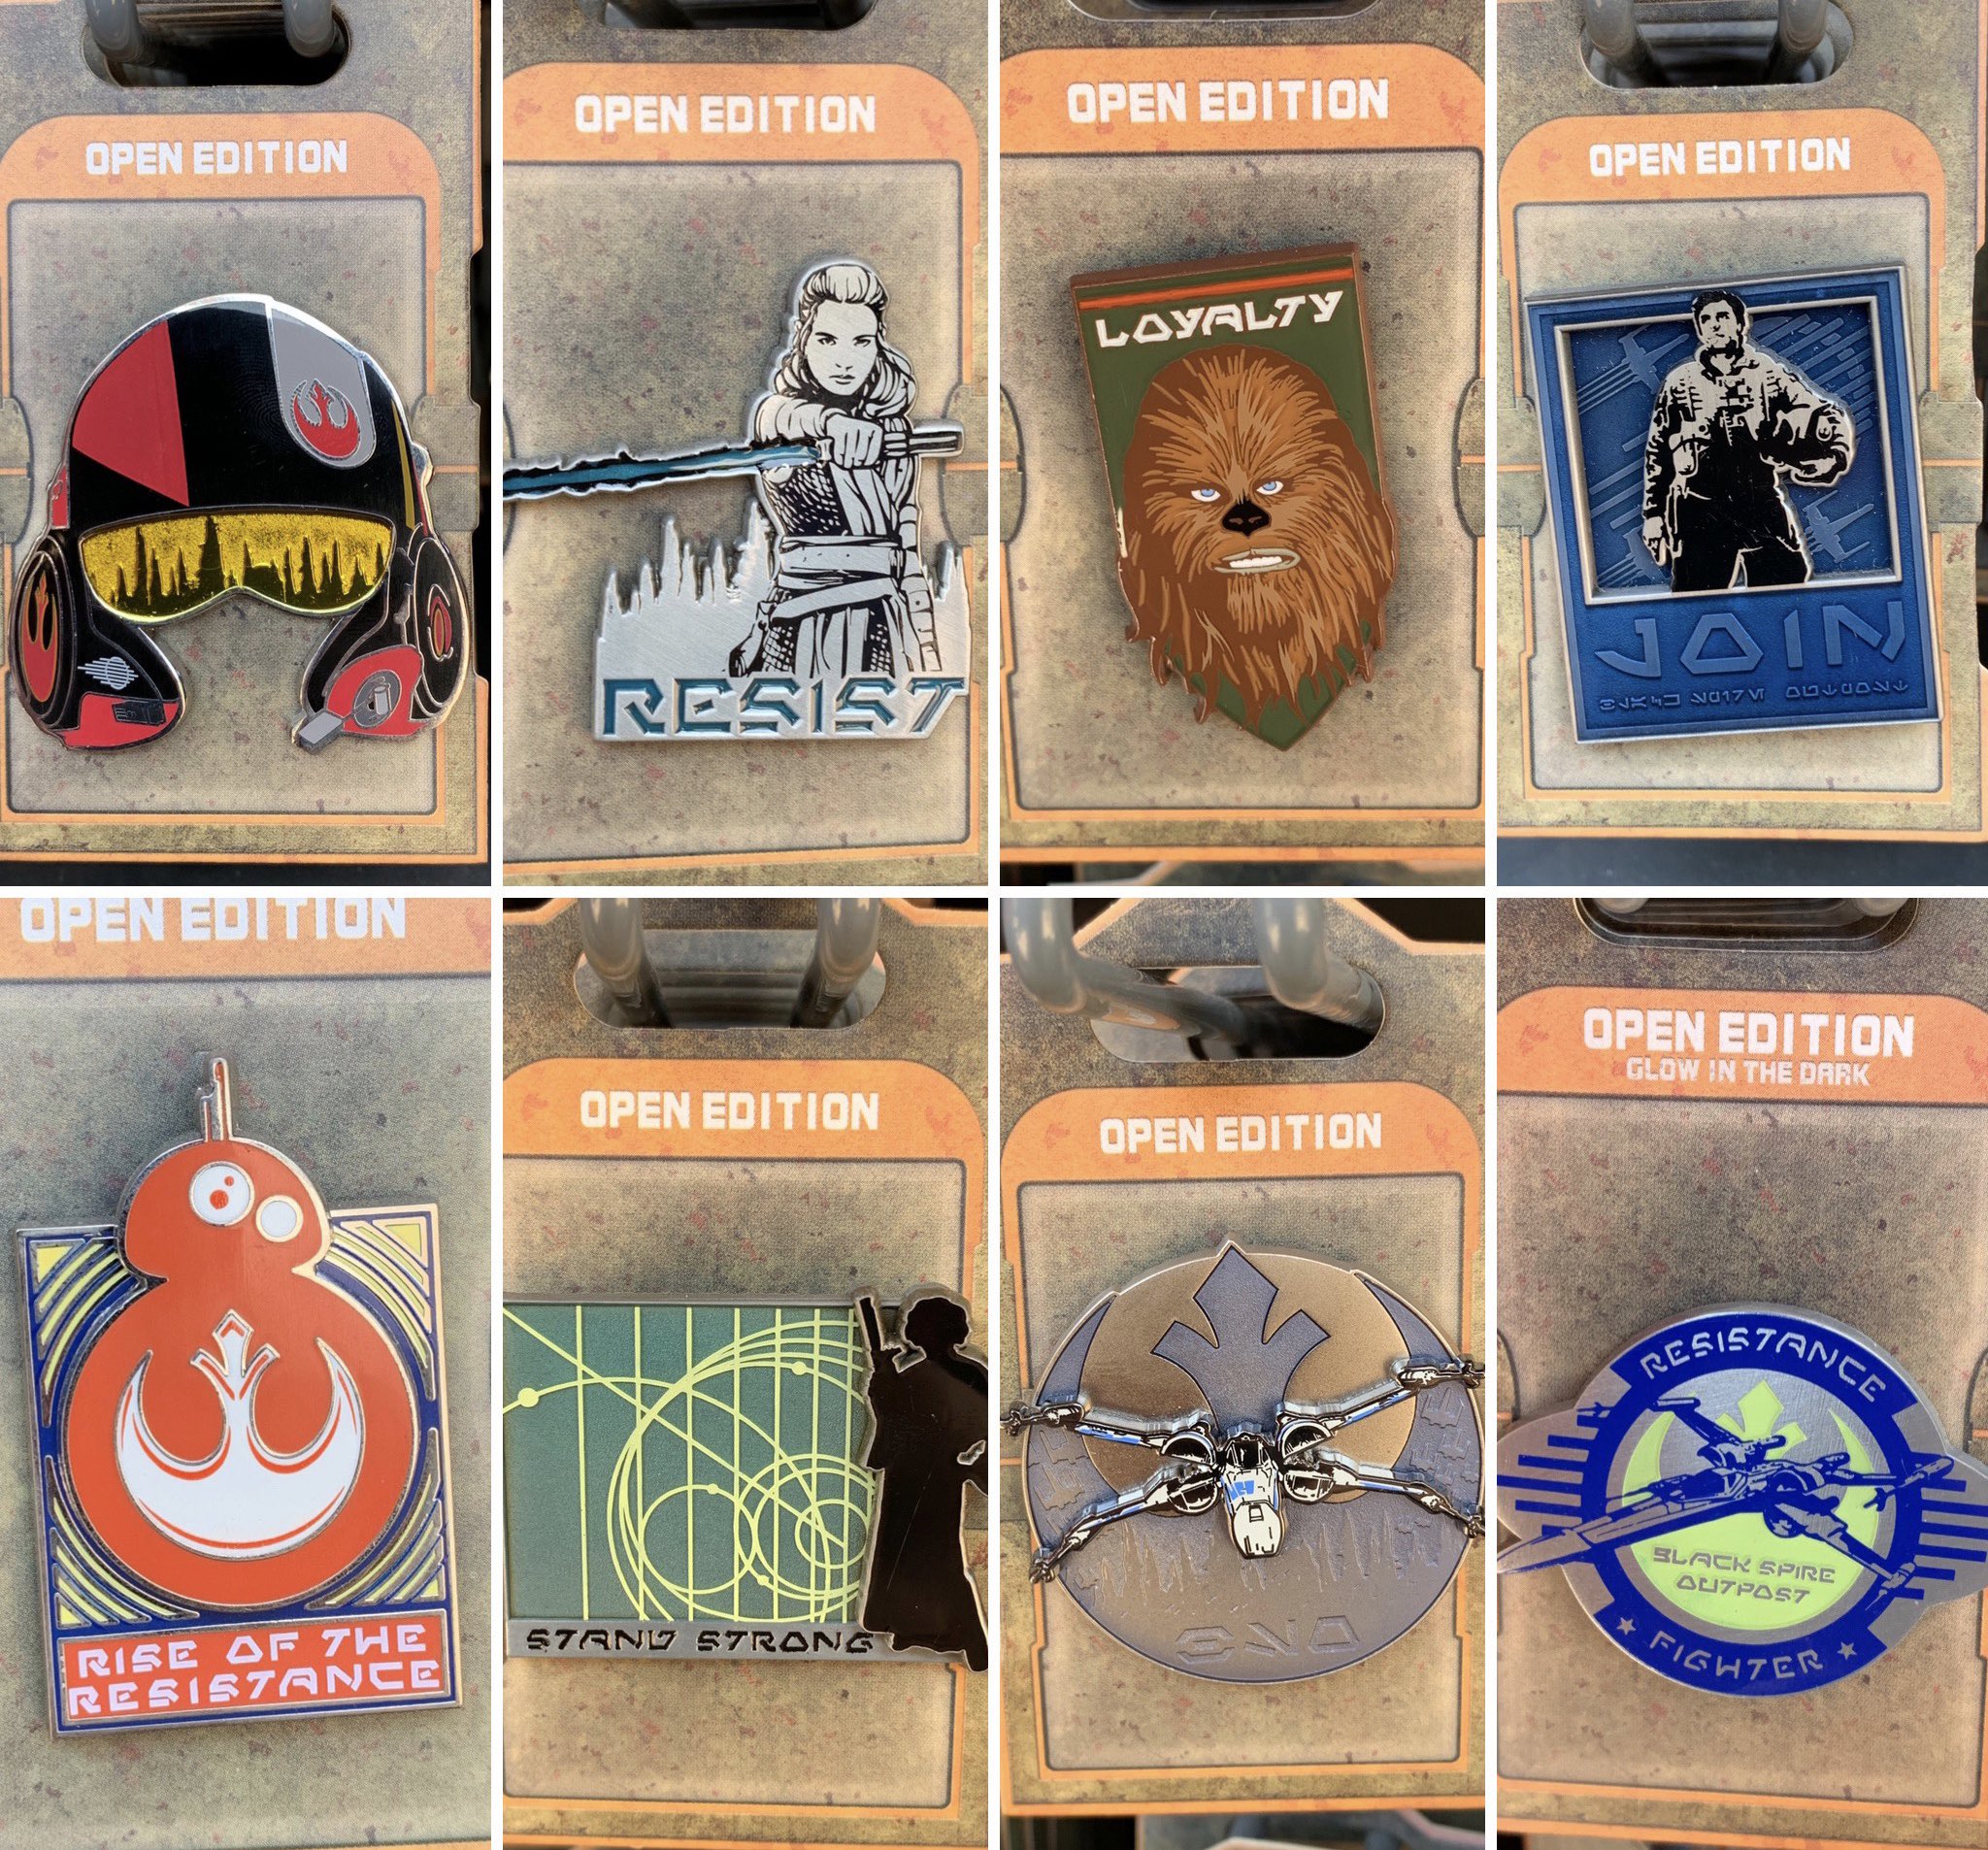 Star Wars Galaxy's Edge Disney Travel Company Pin Set - Disney Pins Blog